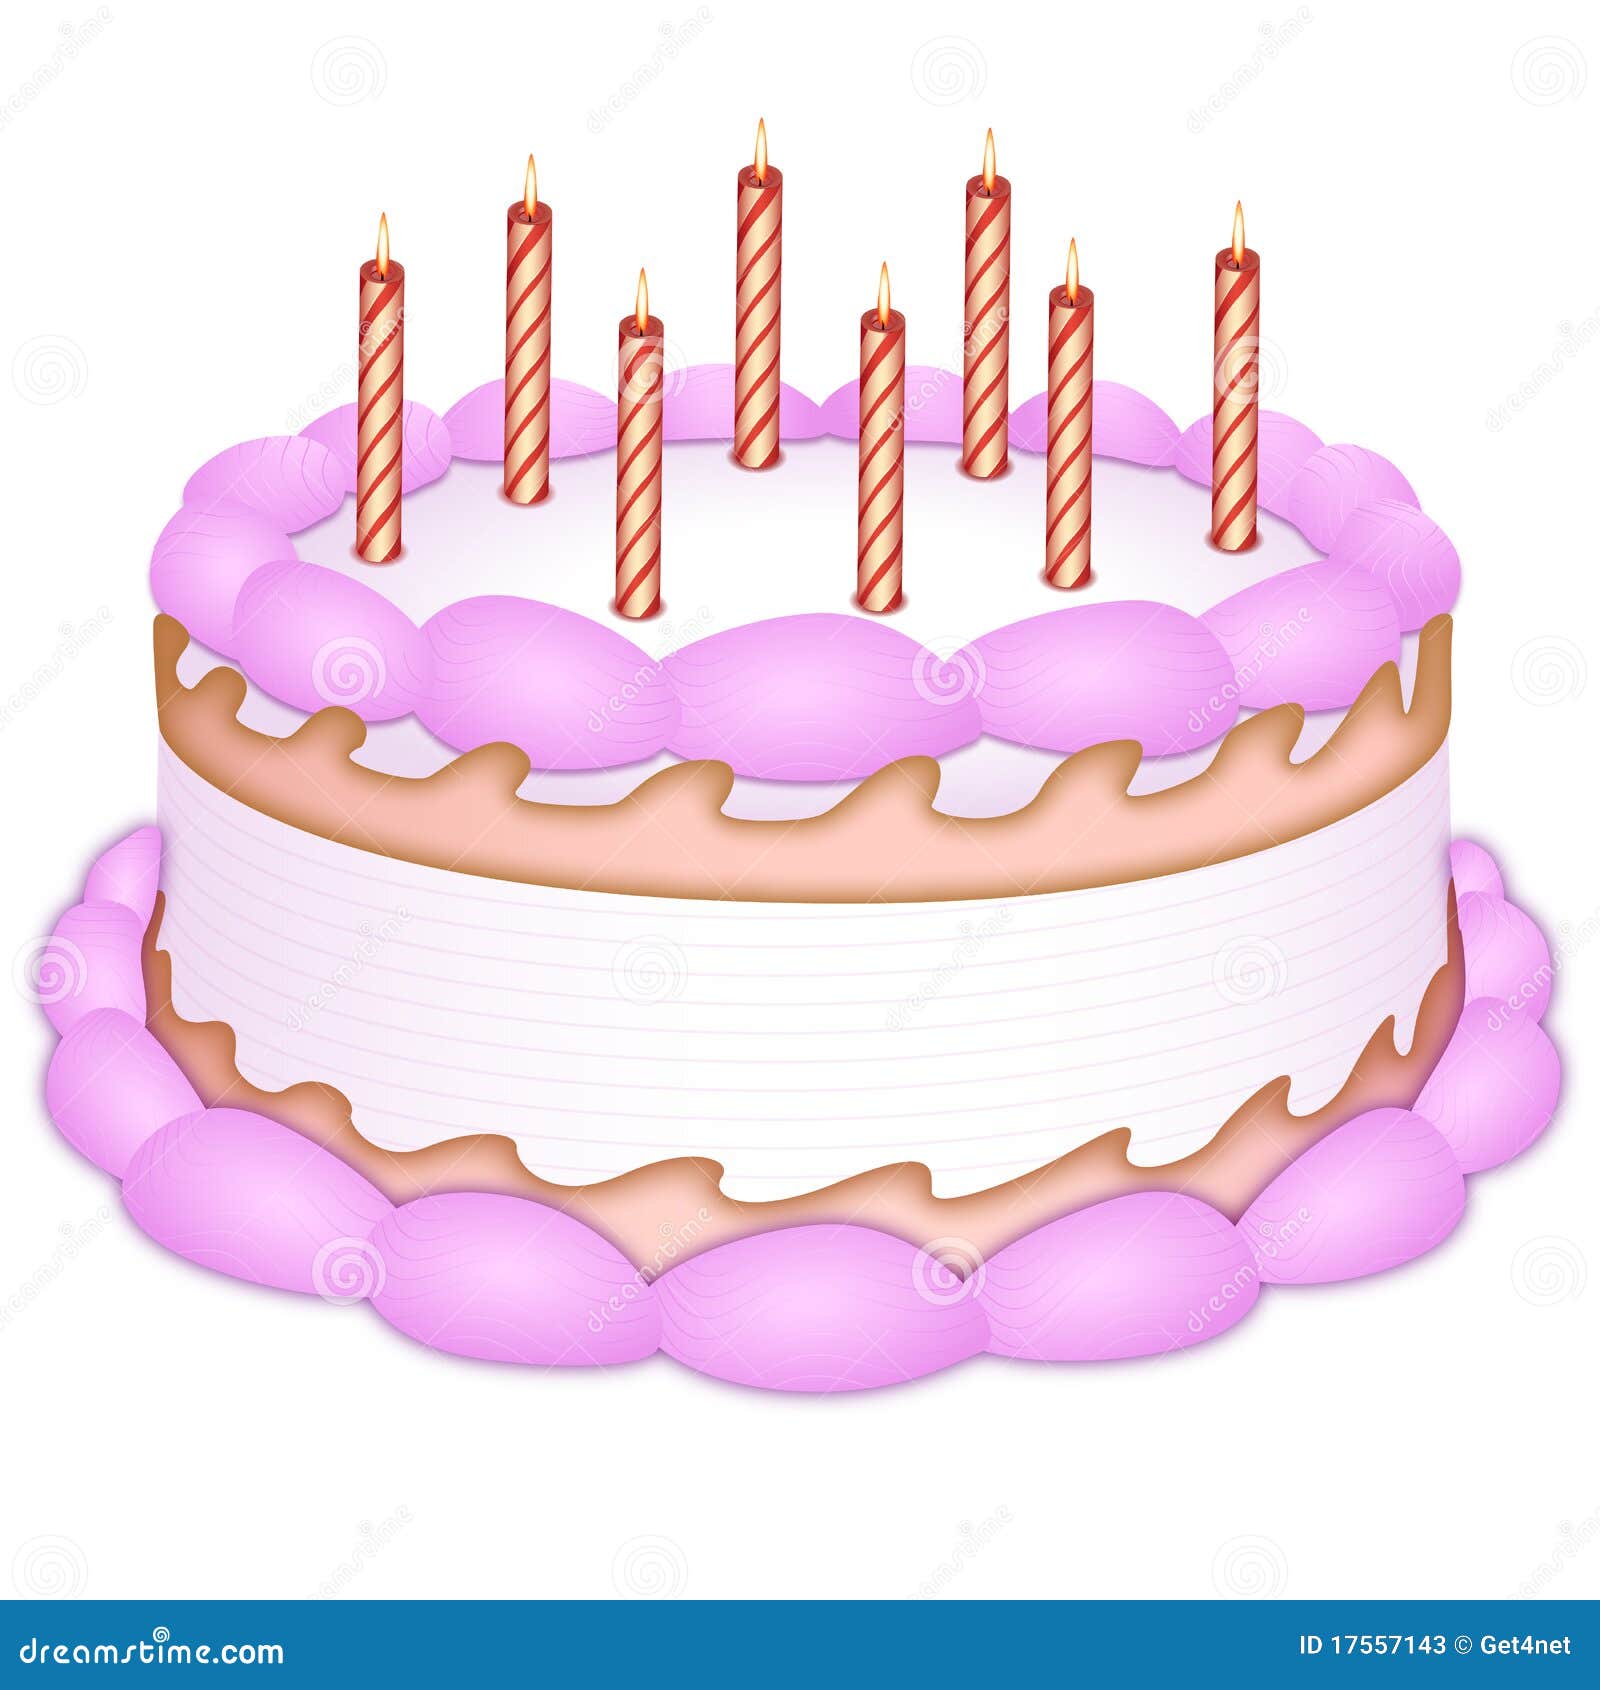 Birthday cake stock vector. Illustration of graphic, element - 17557143